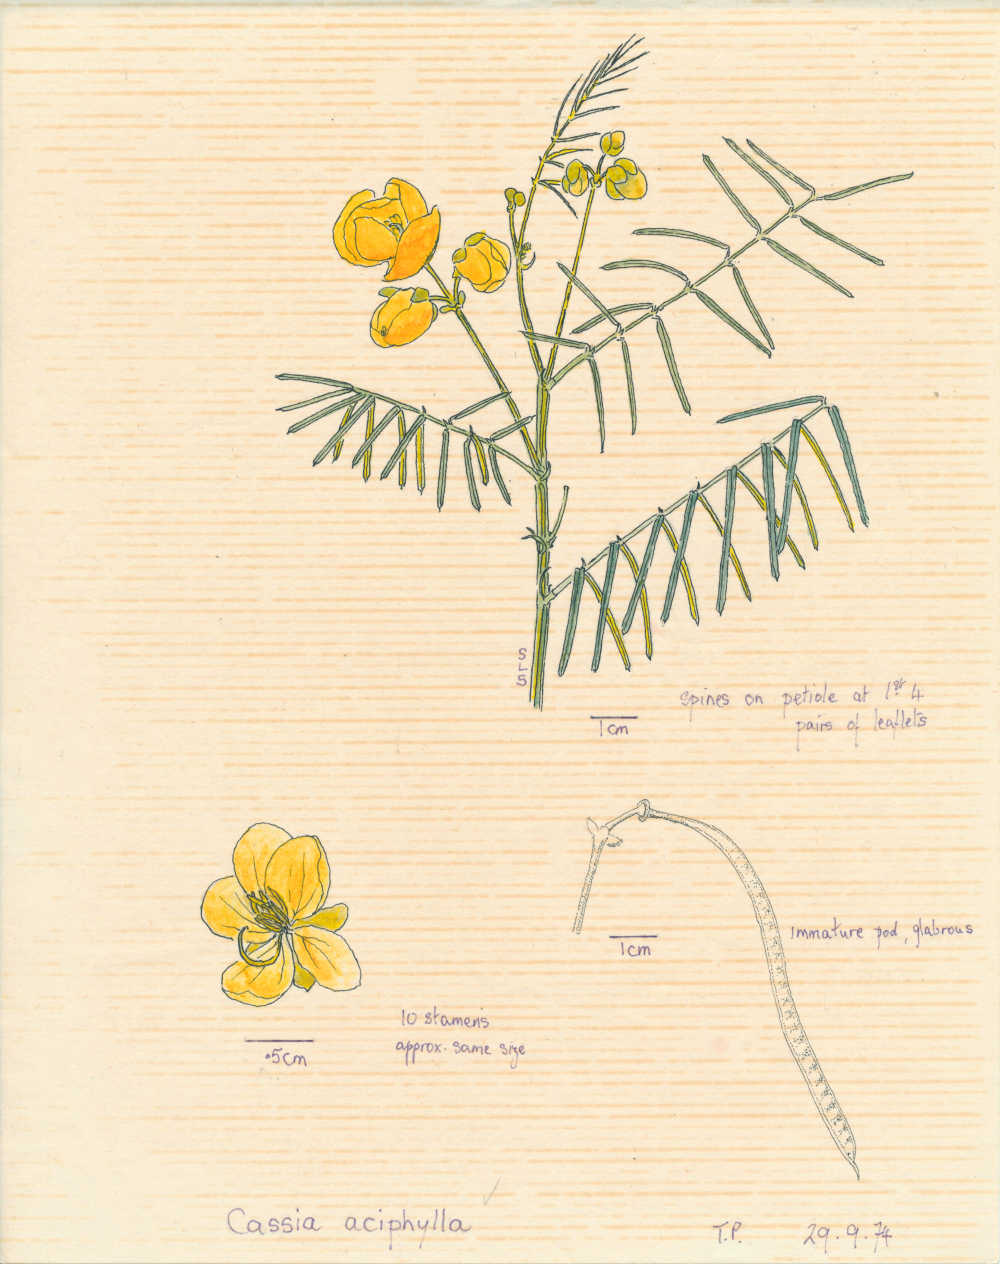 Senna aciphylla  | Cassia aciphylla, depiction by Sylvia Seiler, Killara, West Boondooma, Qld | Queensland Native Seeds